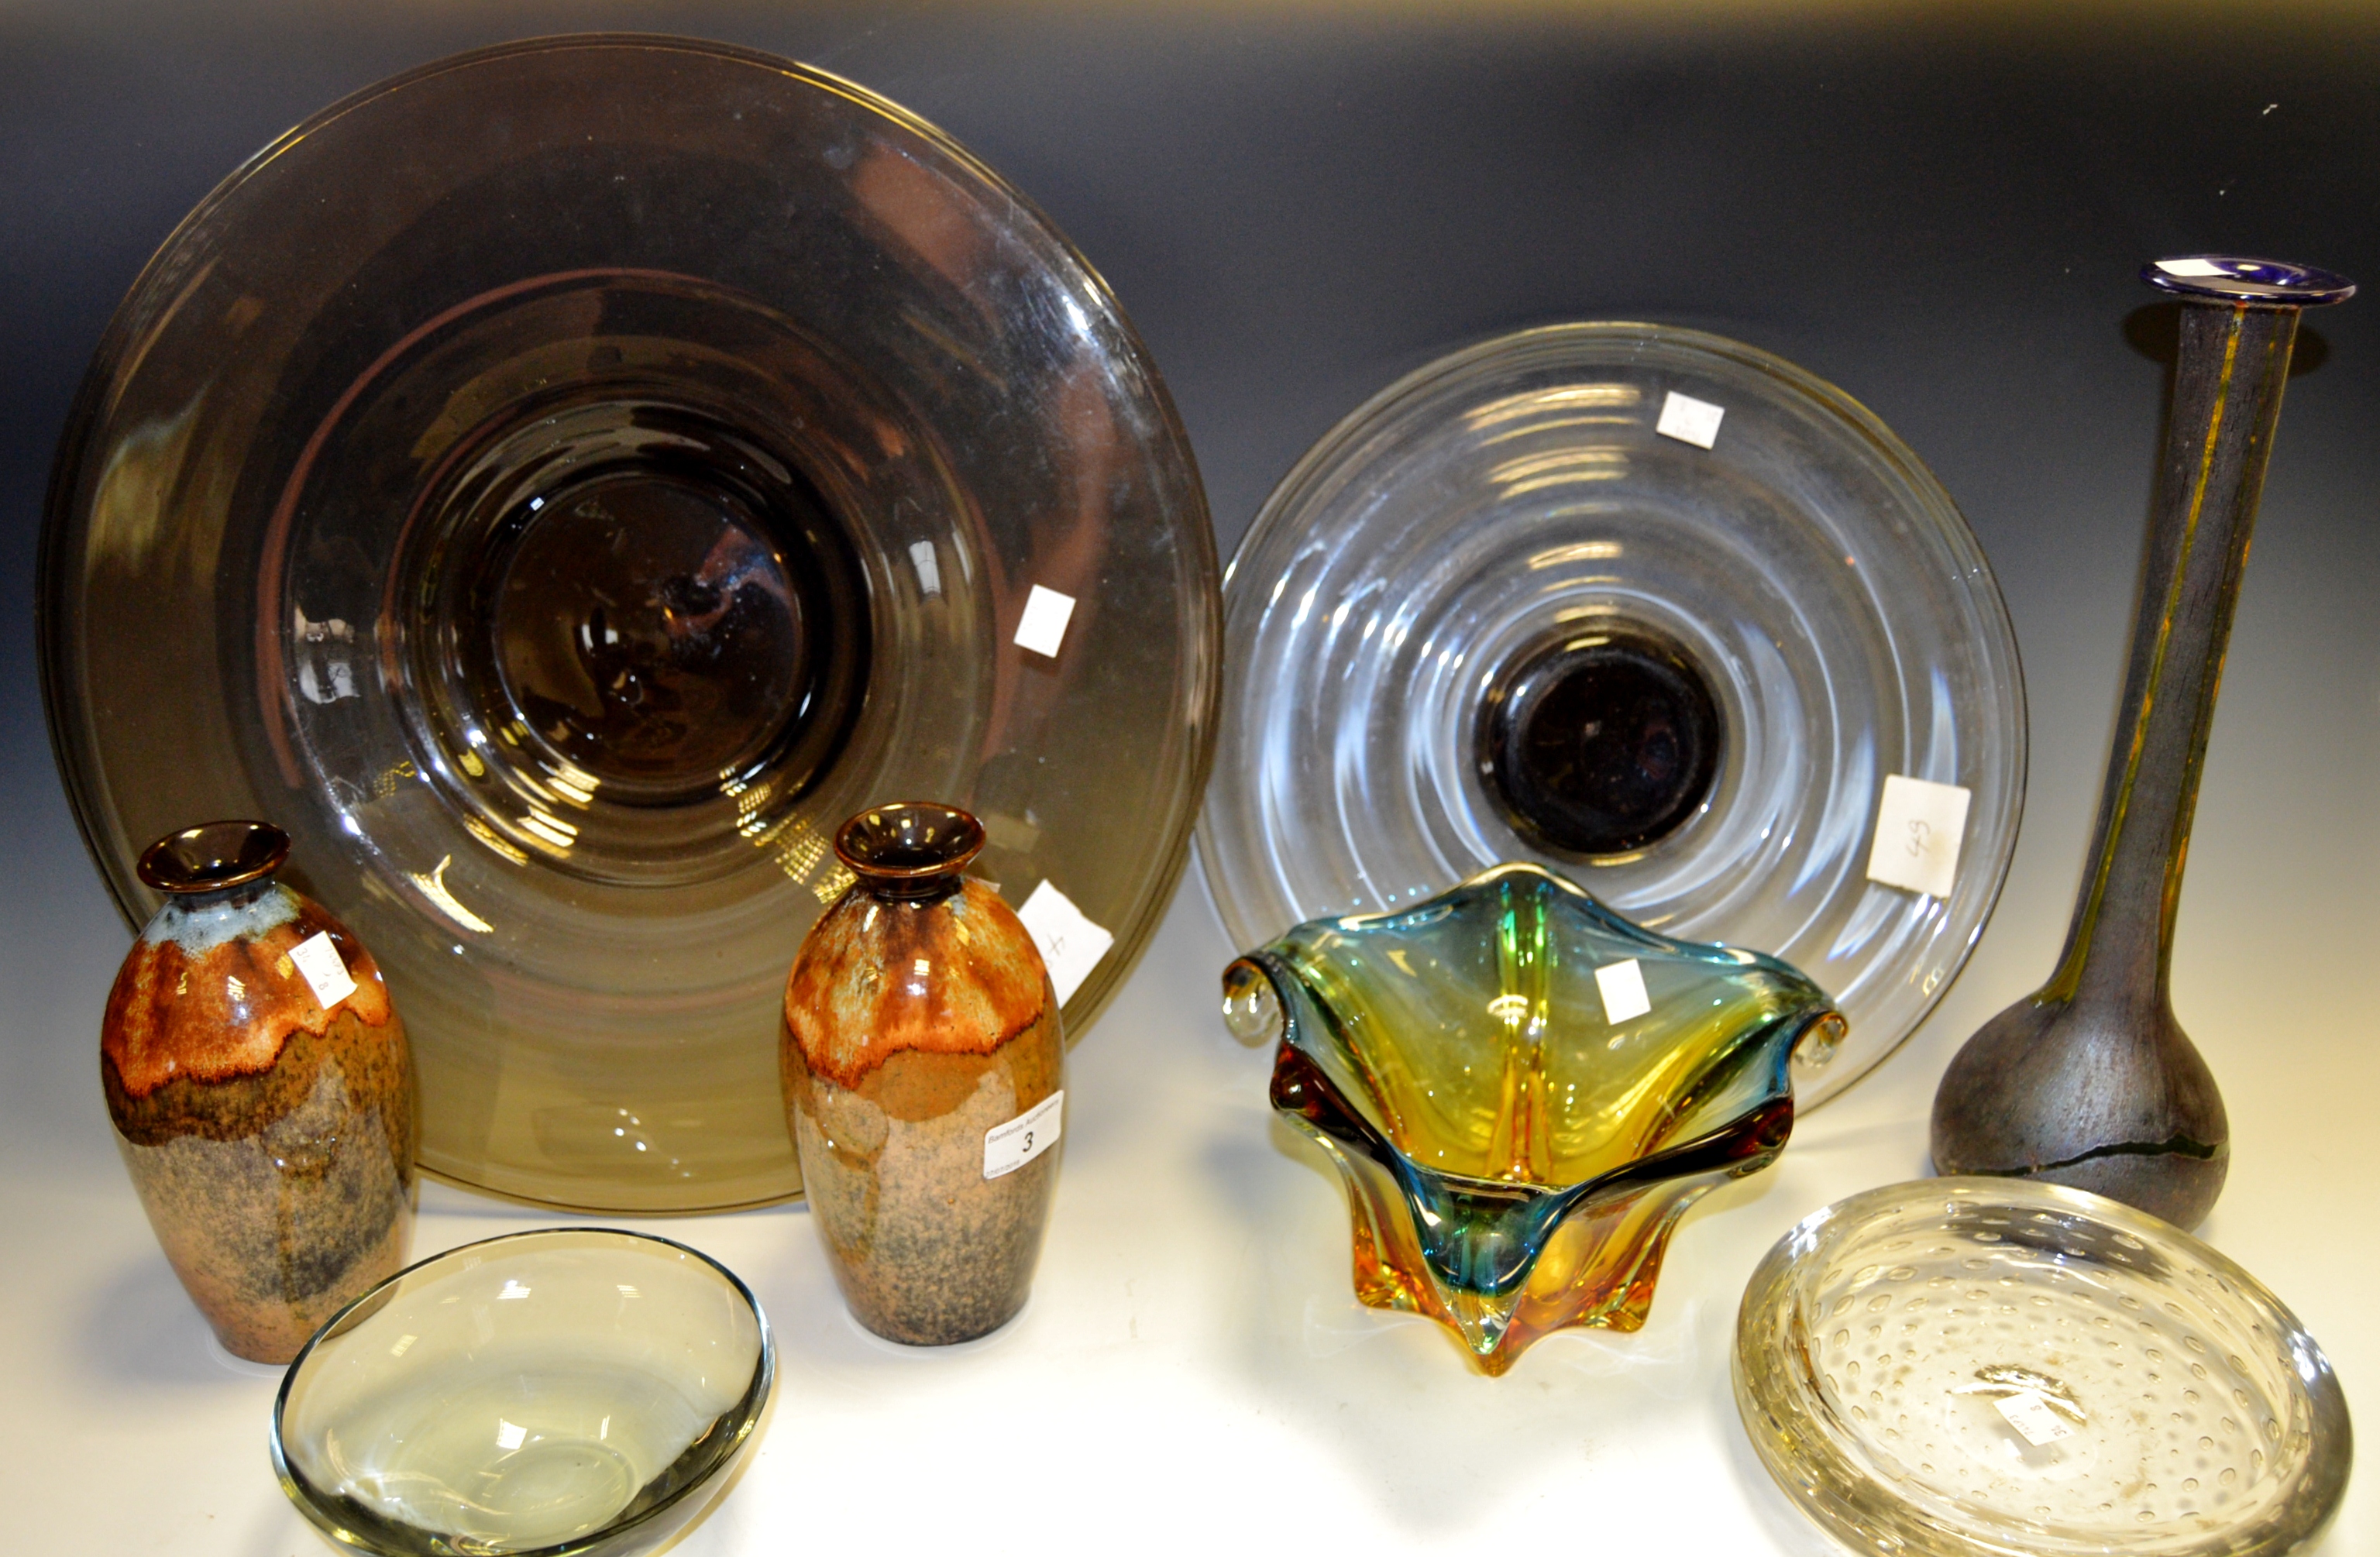 Coloured Glassware - a clear glass,